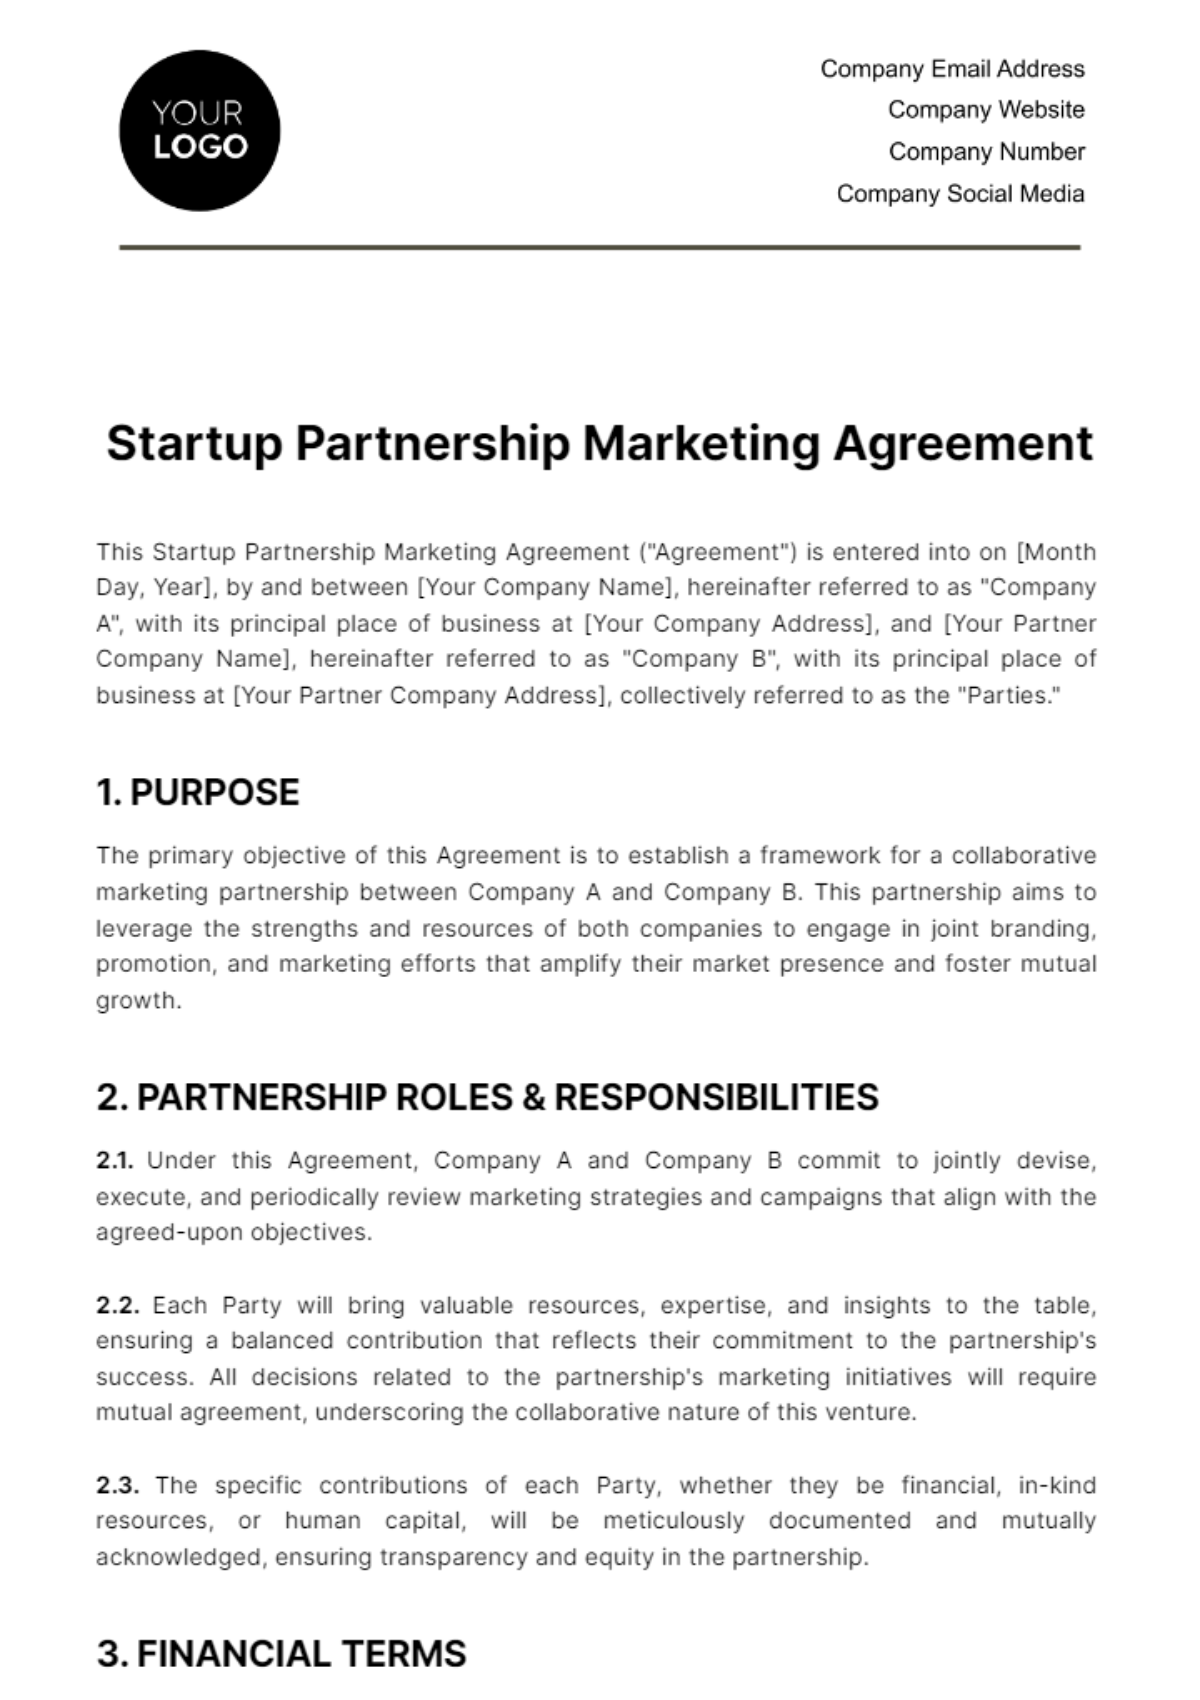 Startup Partnership Marketing Agreement Template